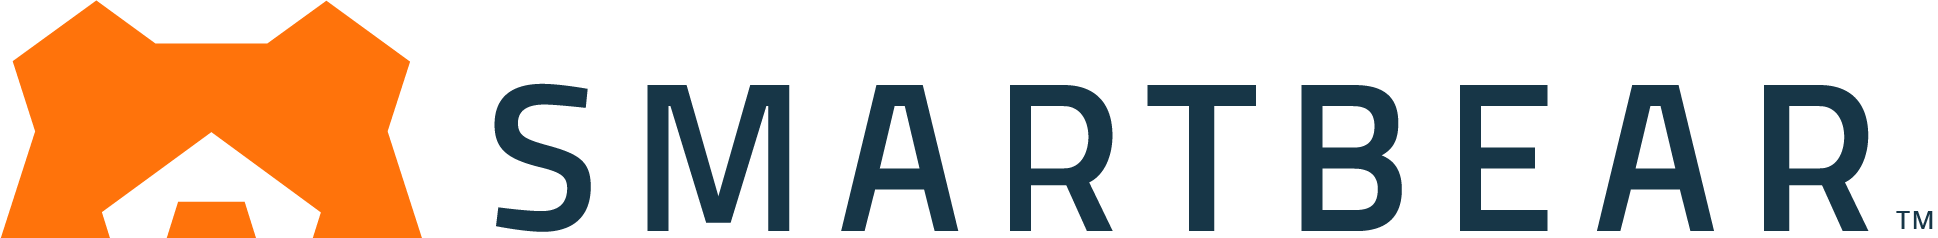 Smart Bear comapny logo